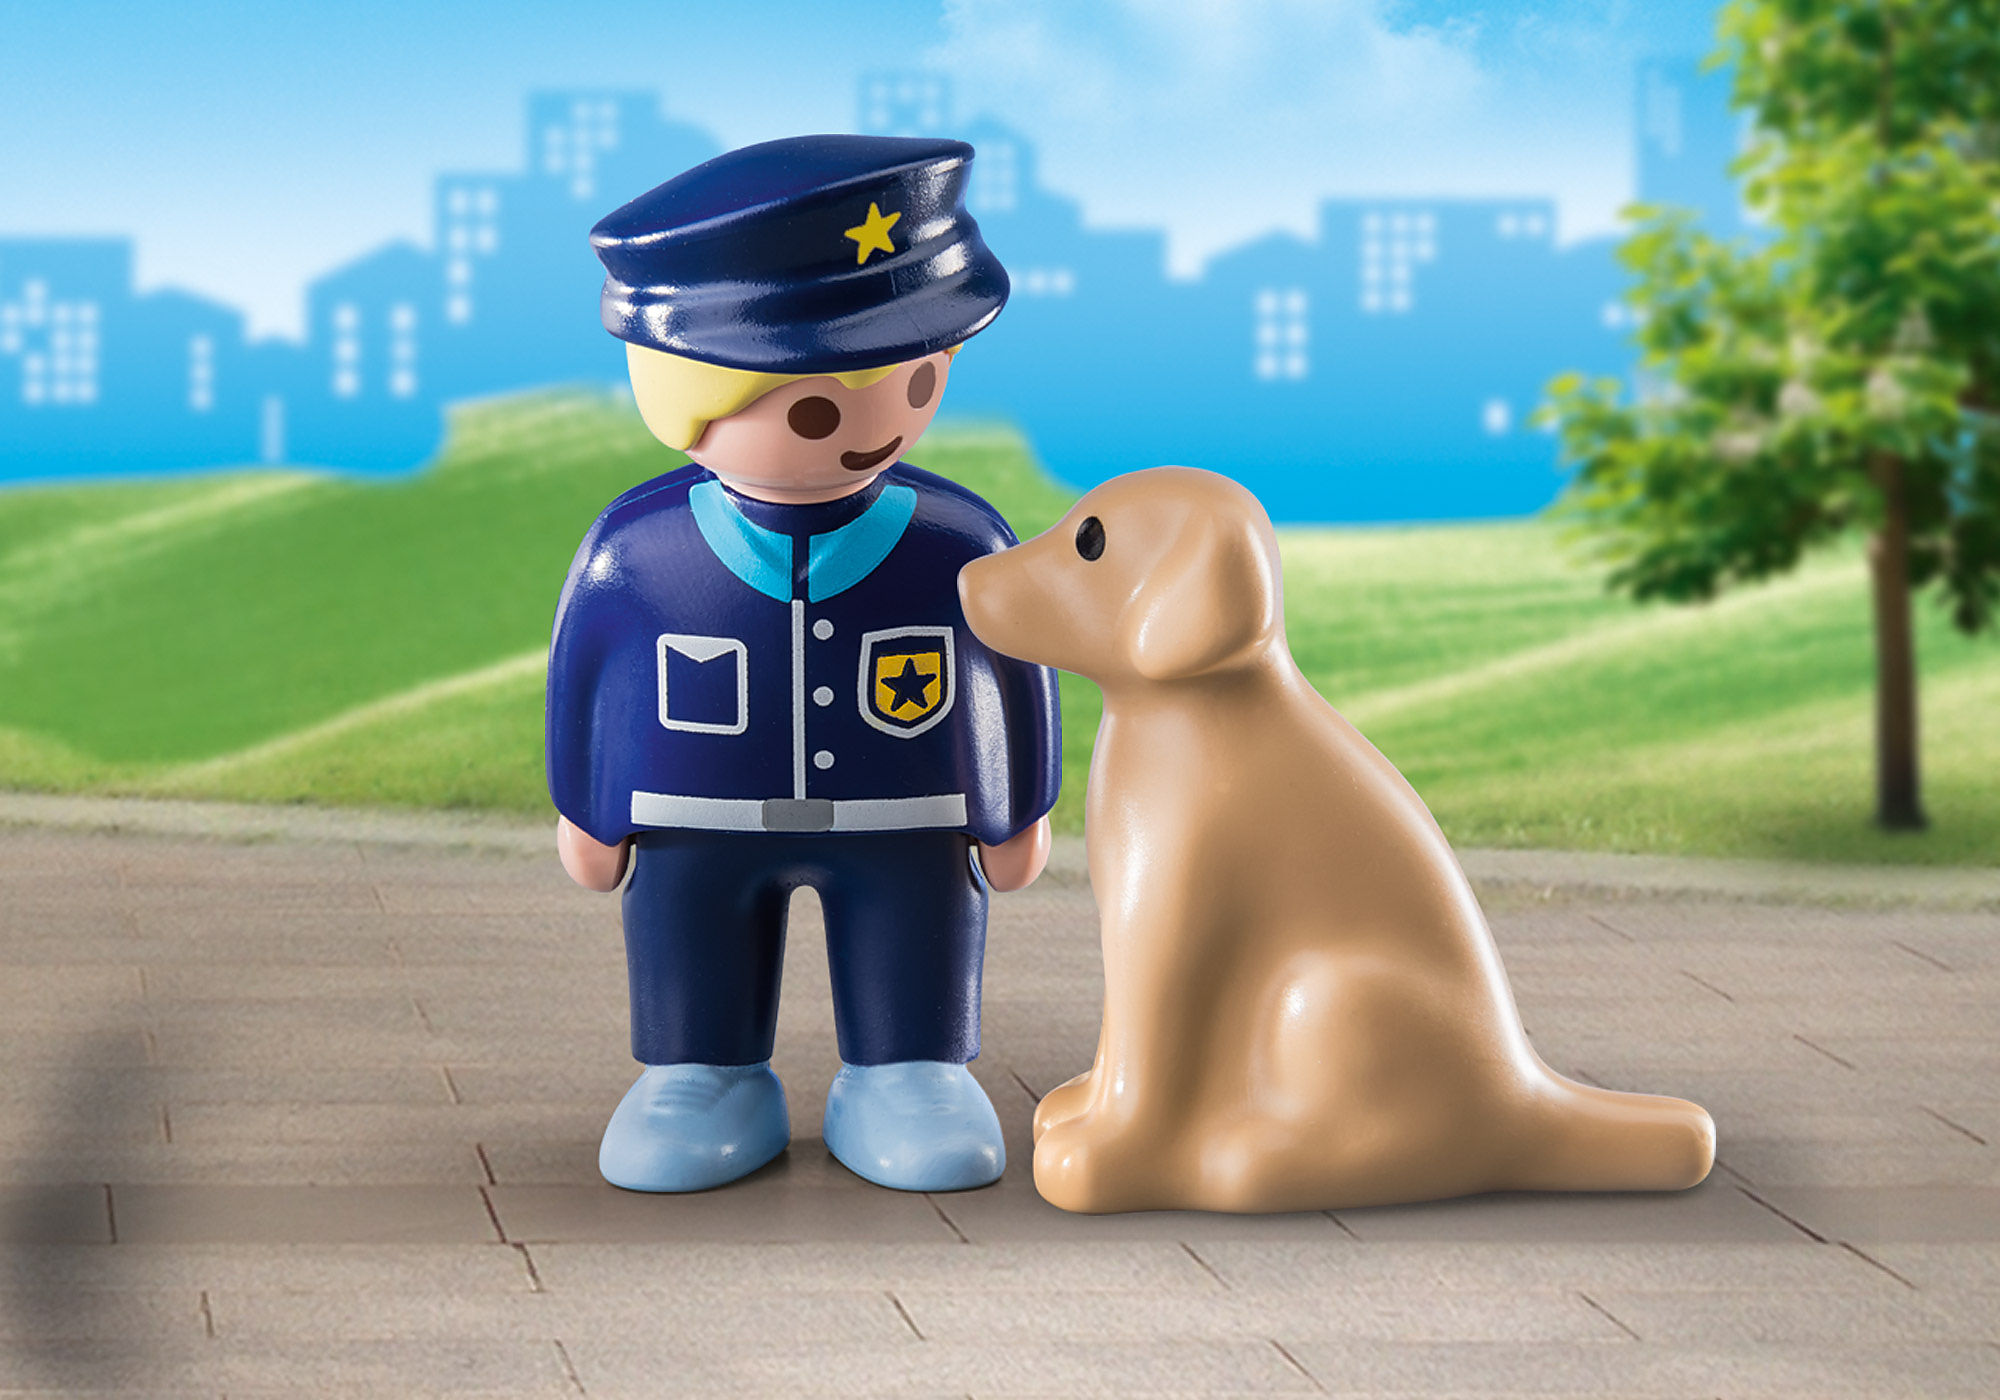 Vintage Playmobil Police Figures, Police Dog and Police Car